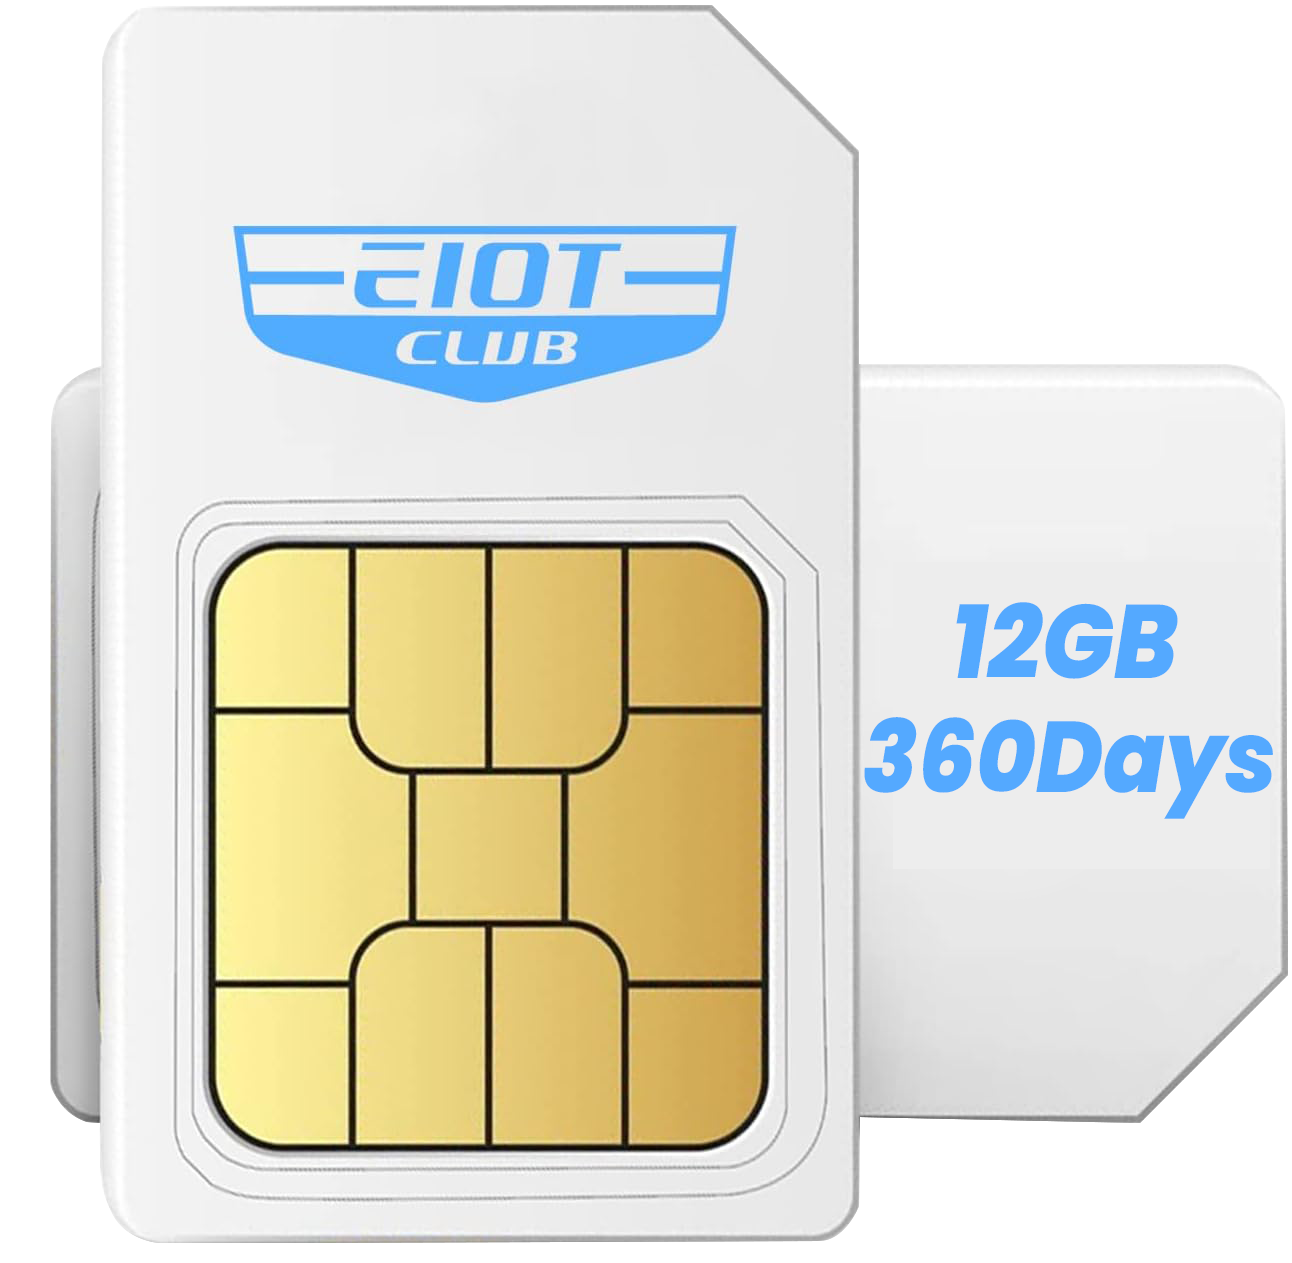 UBox EIOTCLUB SIM card data - 12 month 12GB